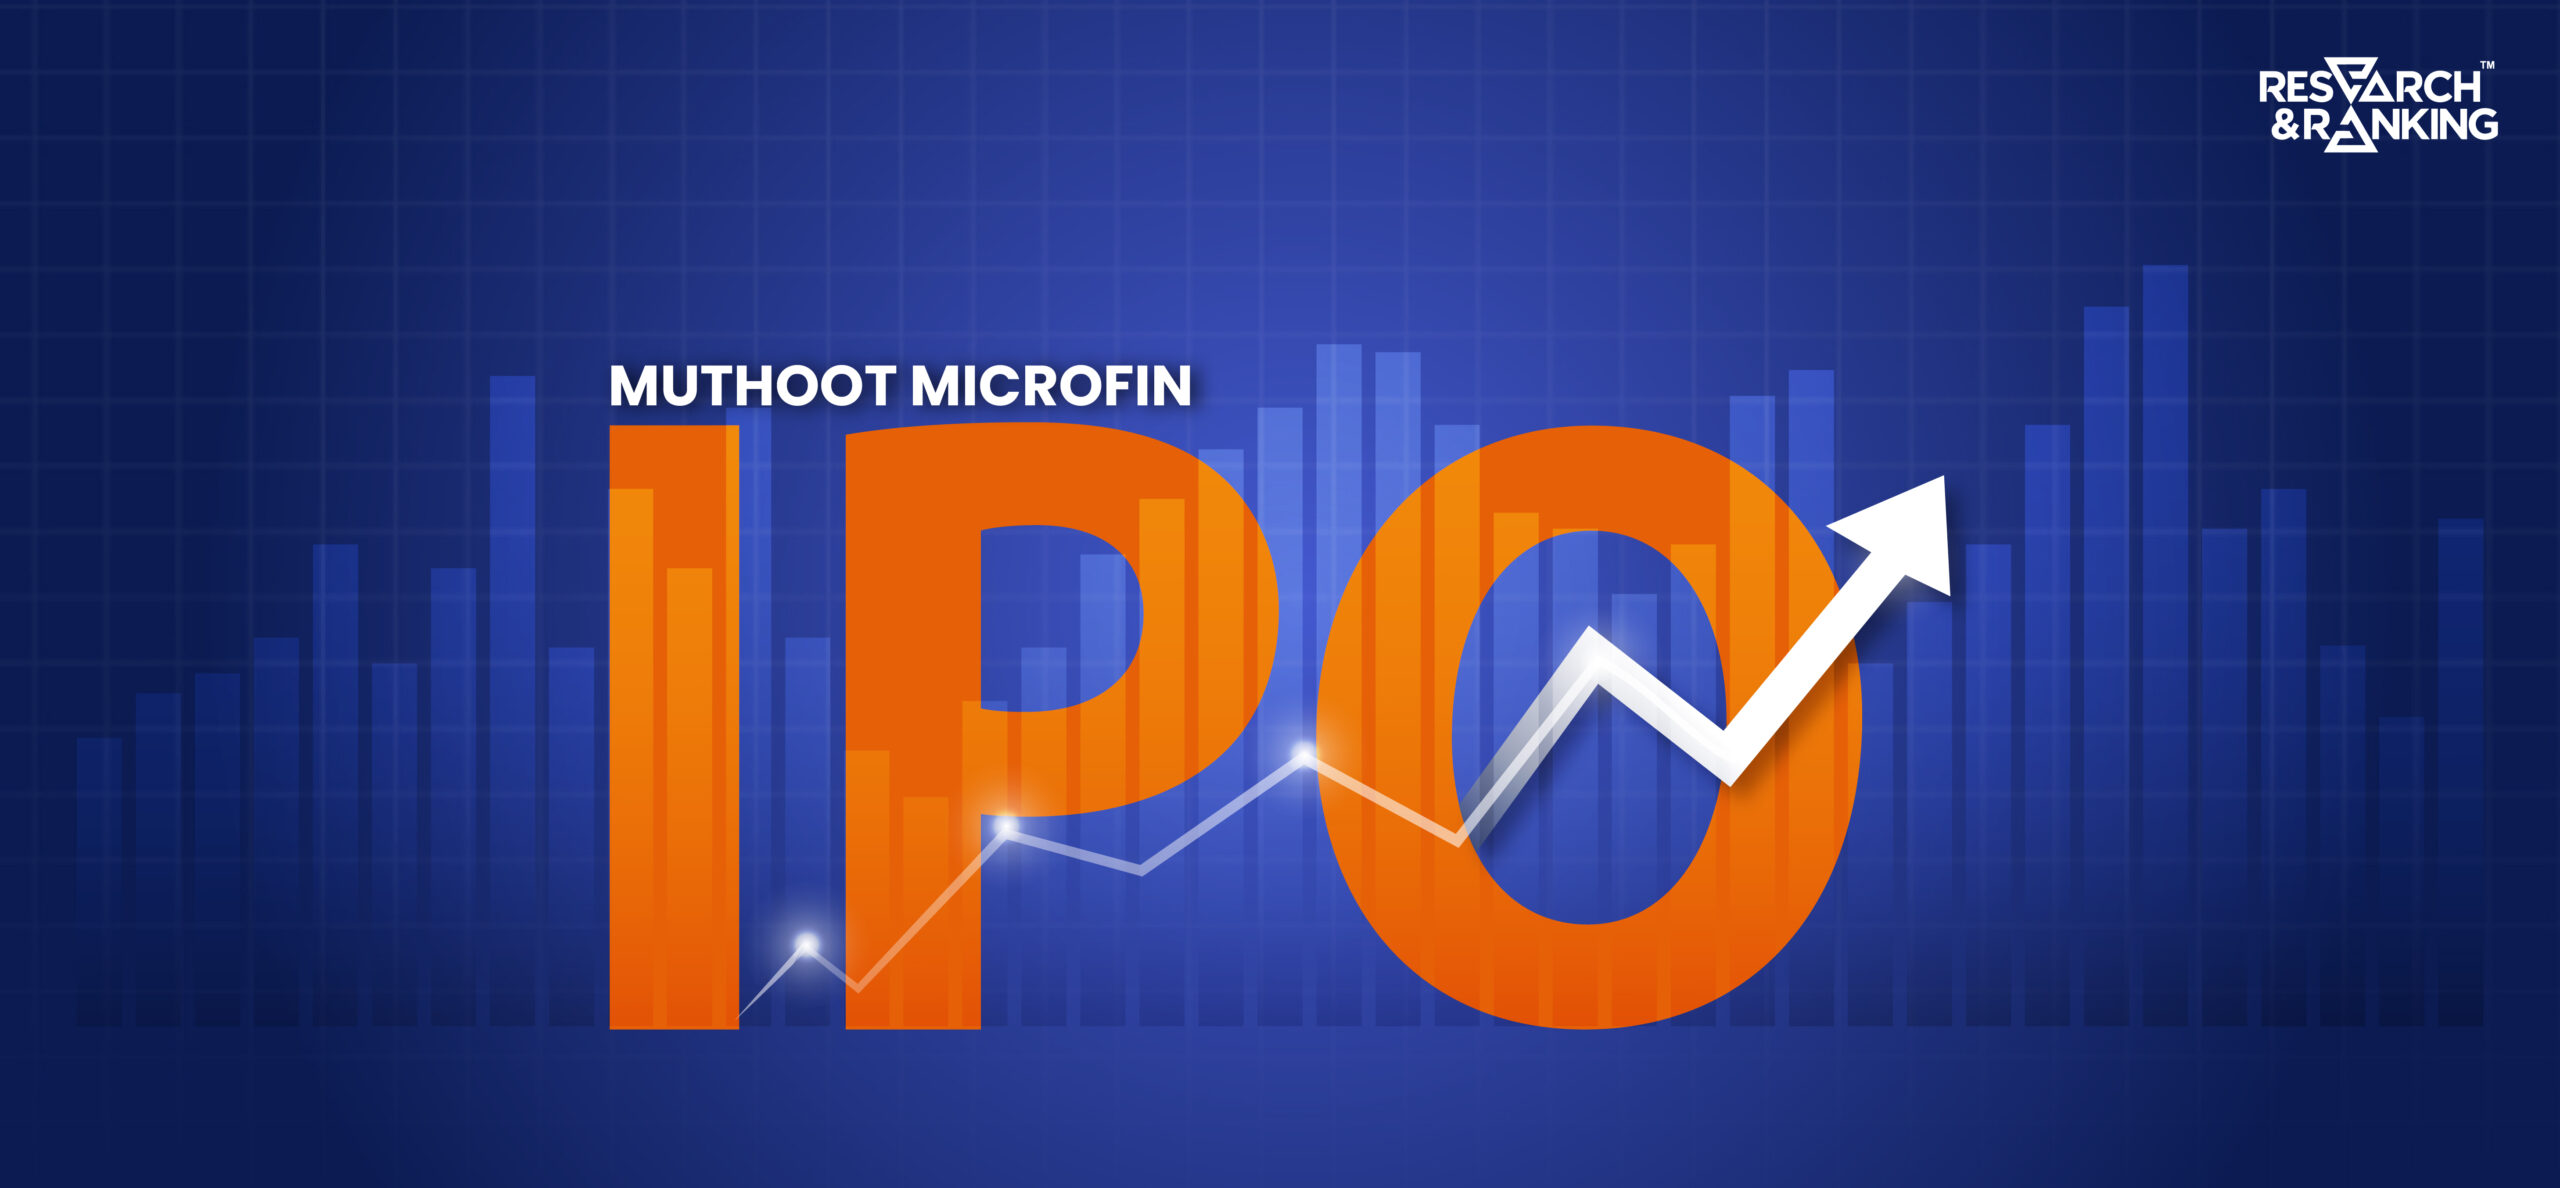 Muthoot Microfin Ltd. IPO